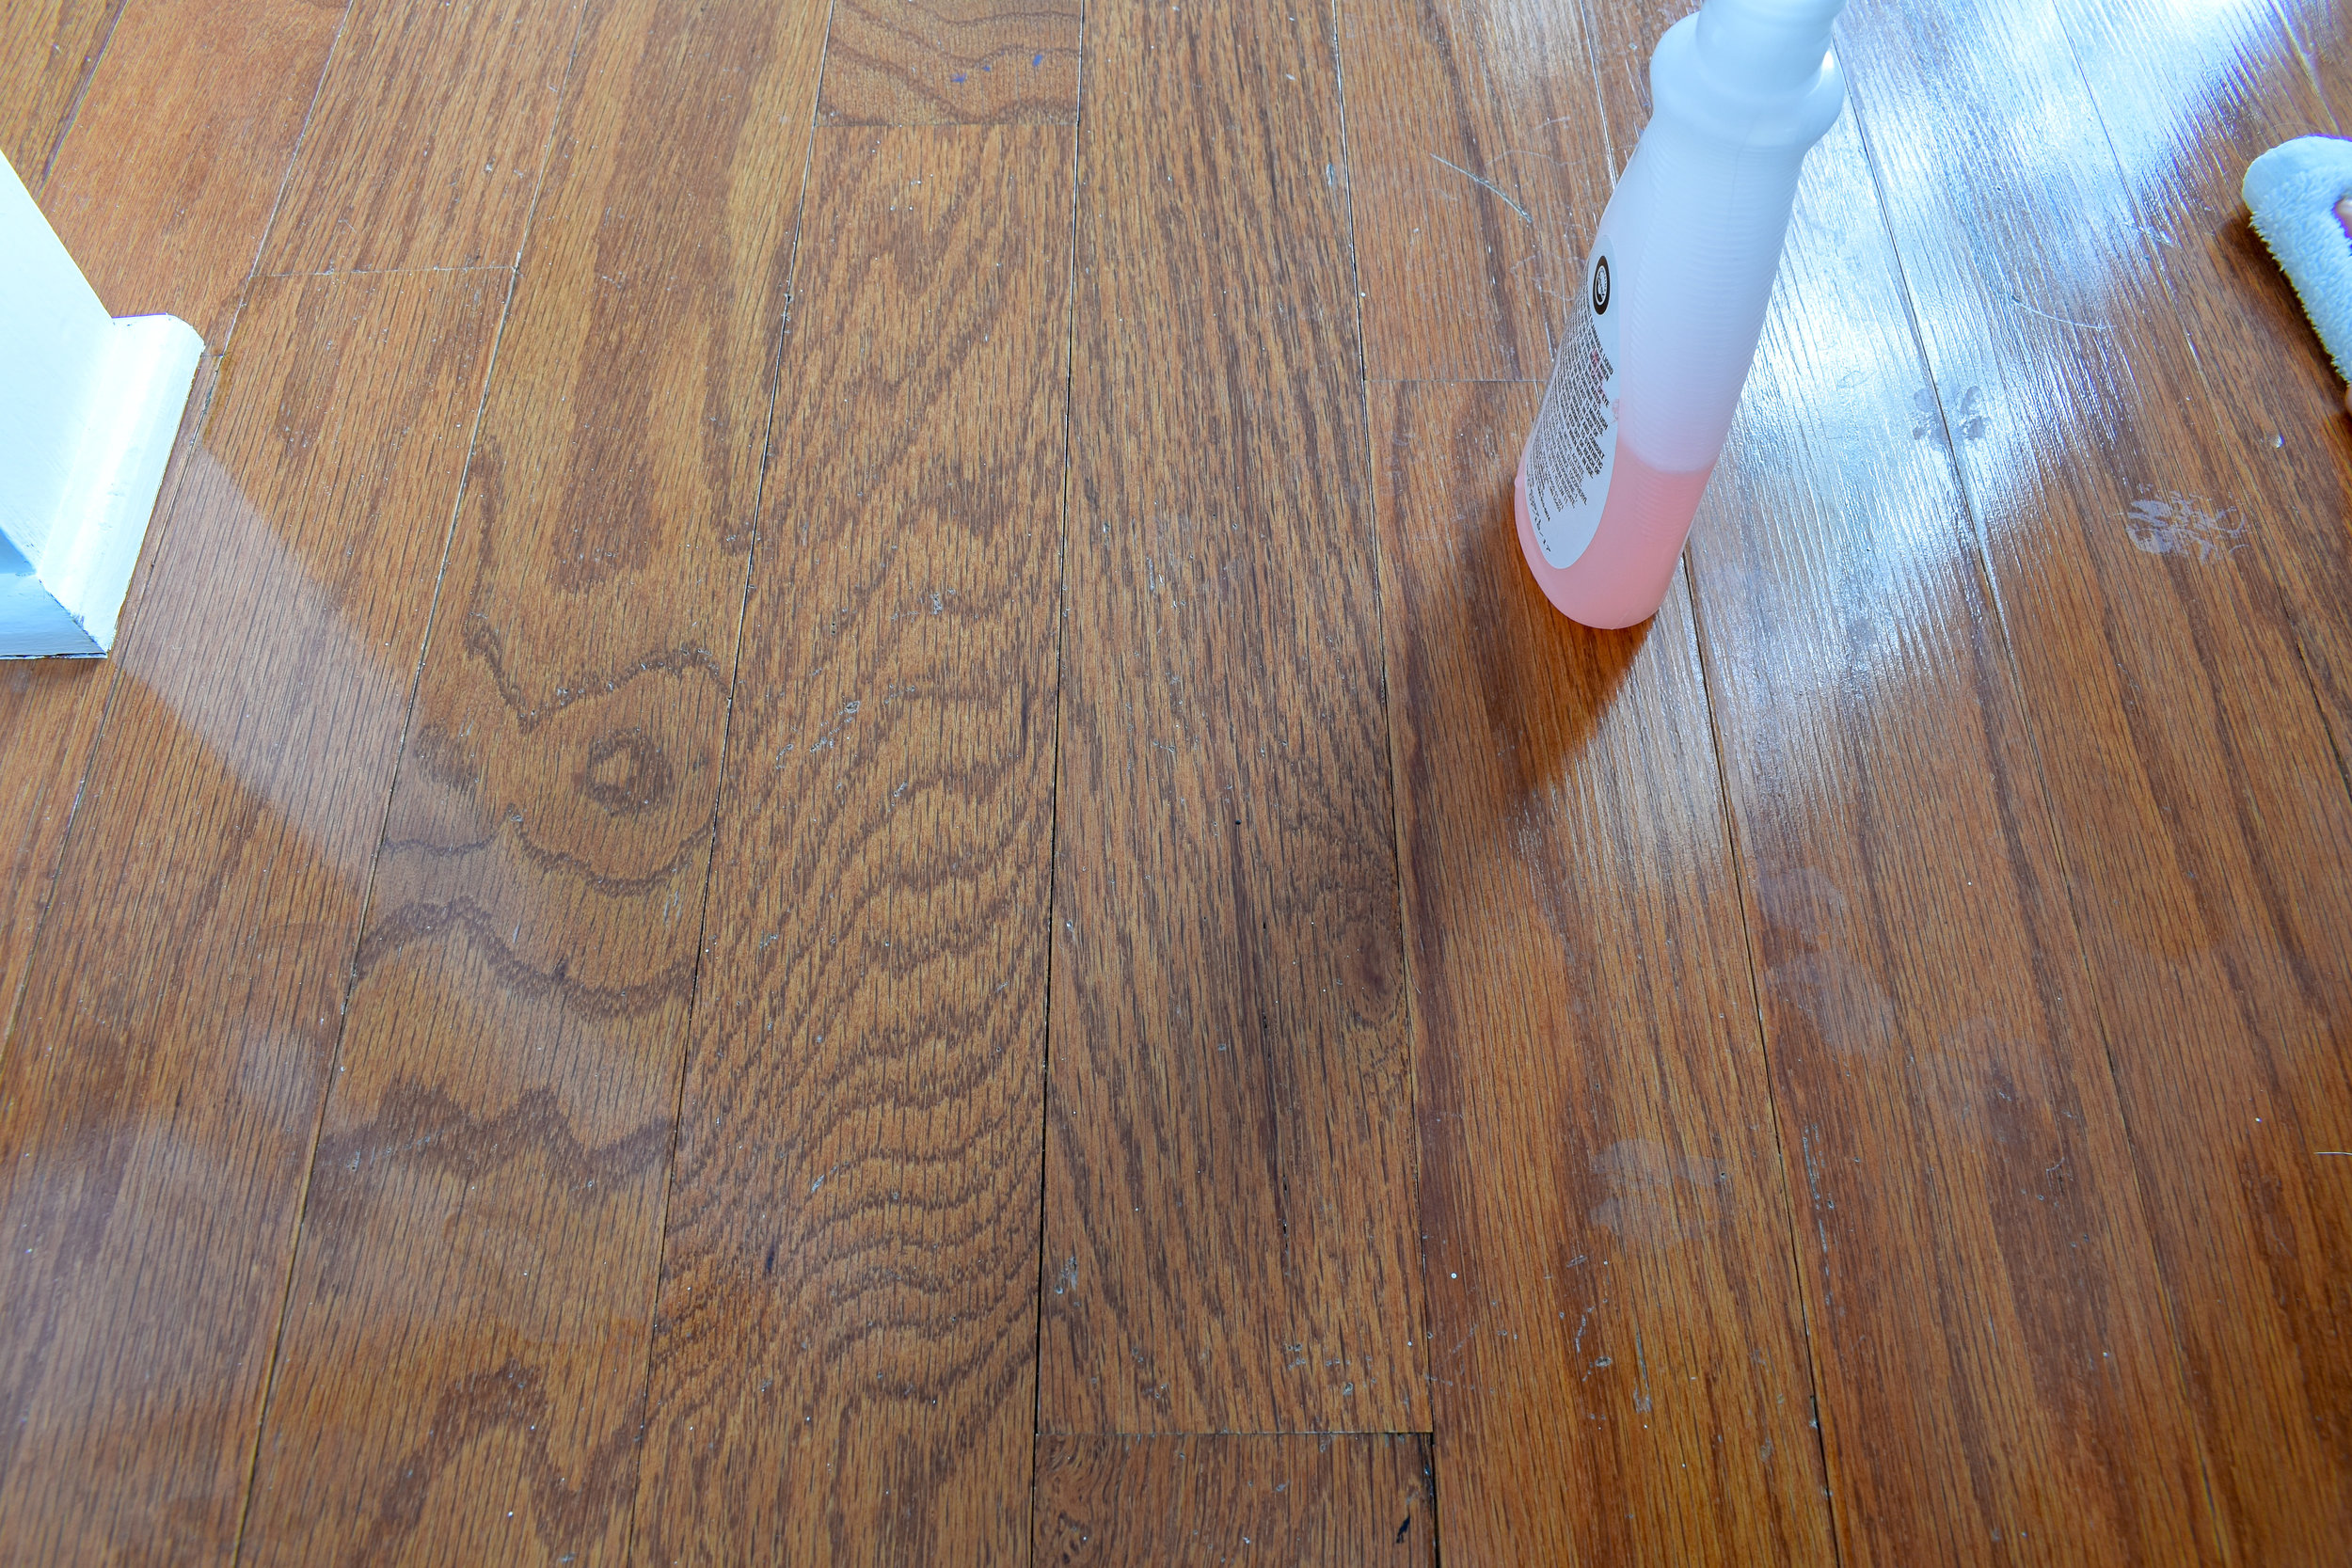 How To Make Old Hardwood Floors Shine, Re Varnish Hardwood Floors